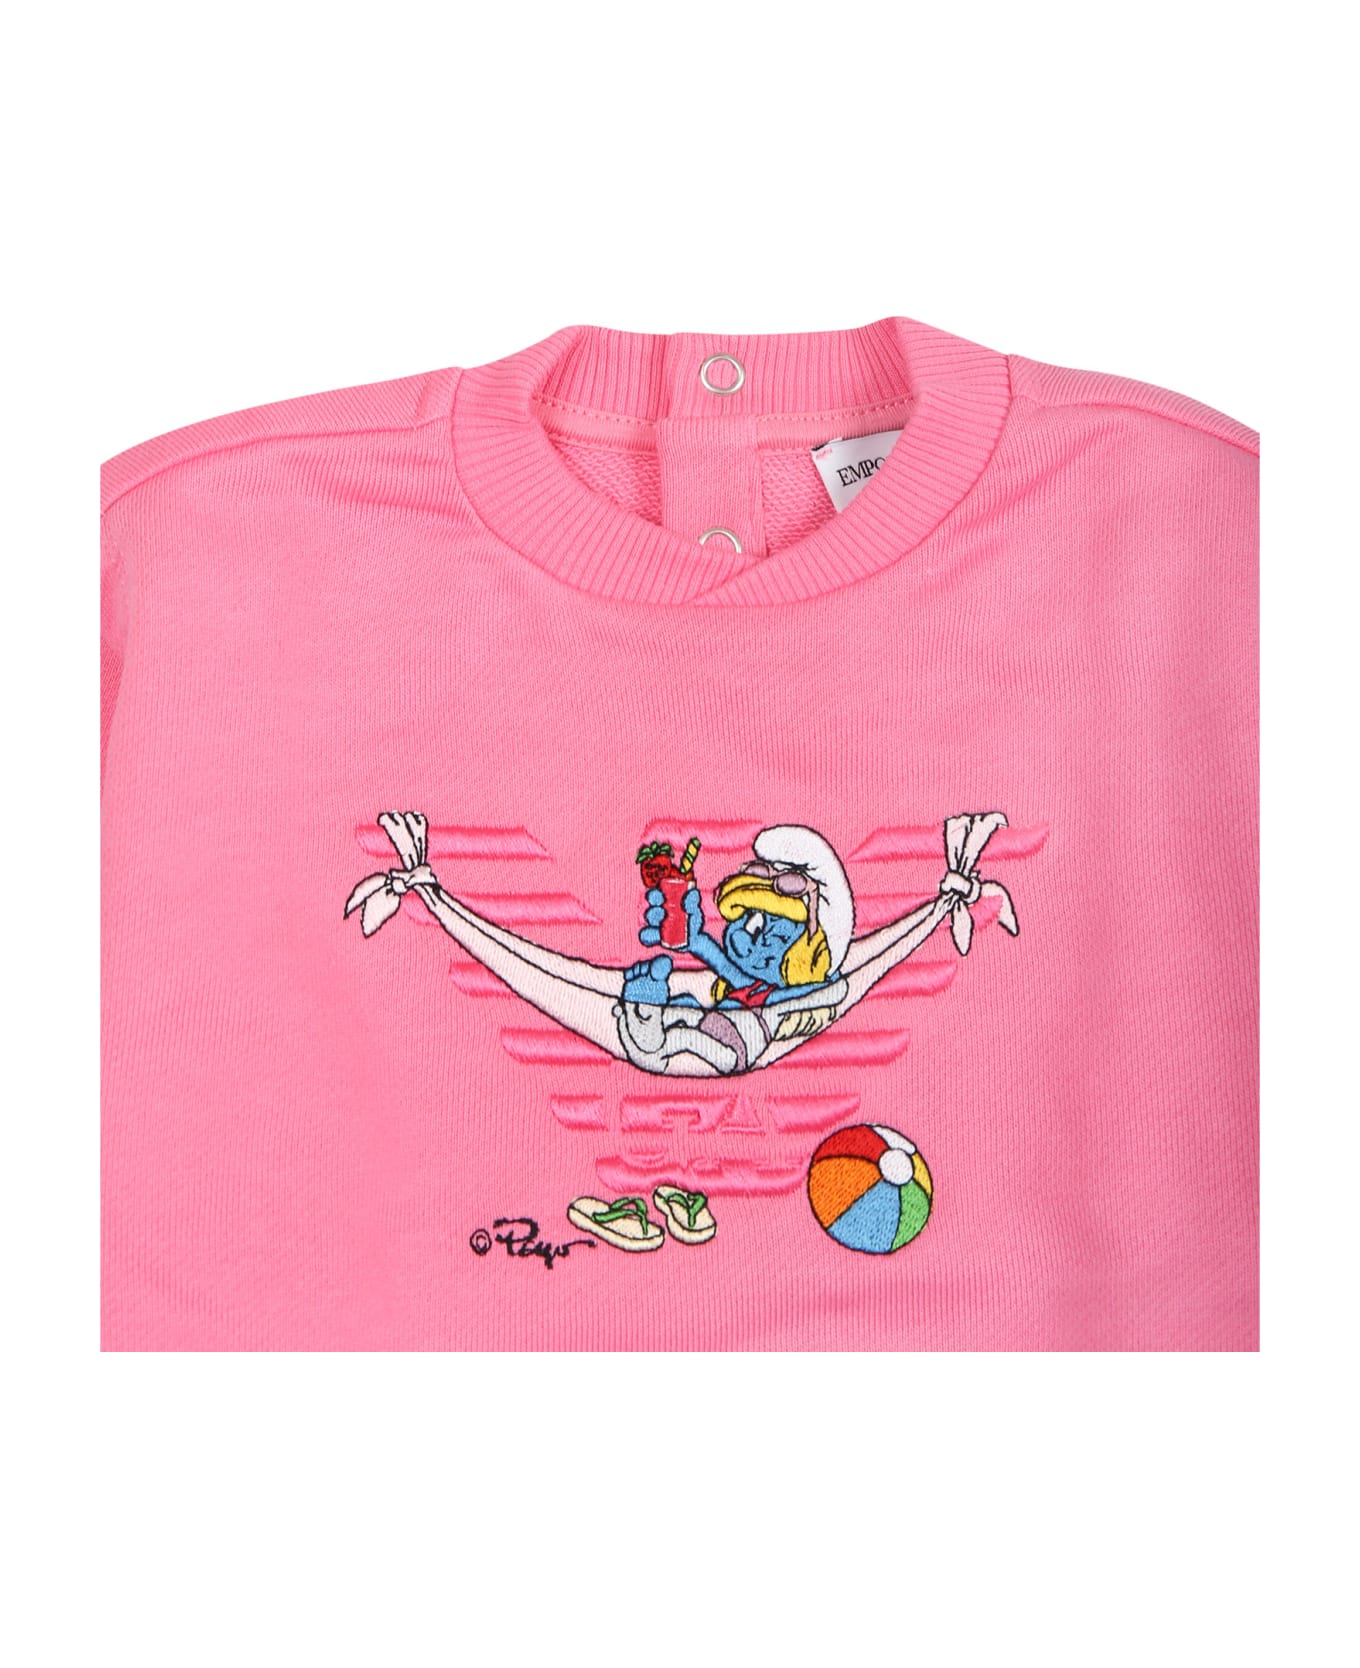 Emporio Armani Pink Sweatshirt For Baby Girl With The Smurfs - Pink ニットウェア＆スウェットシャツ